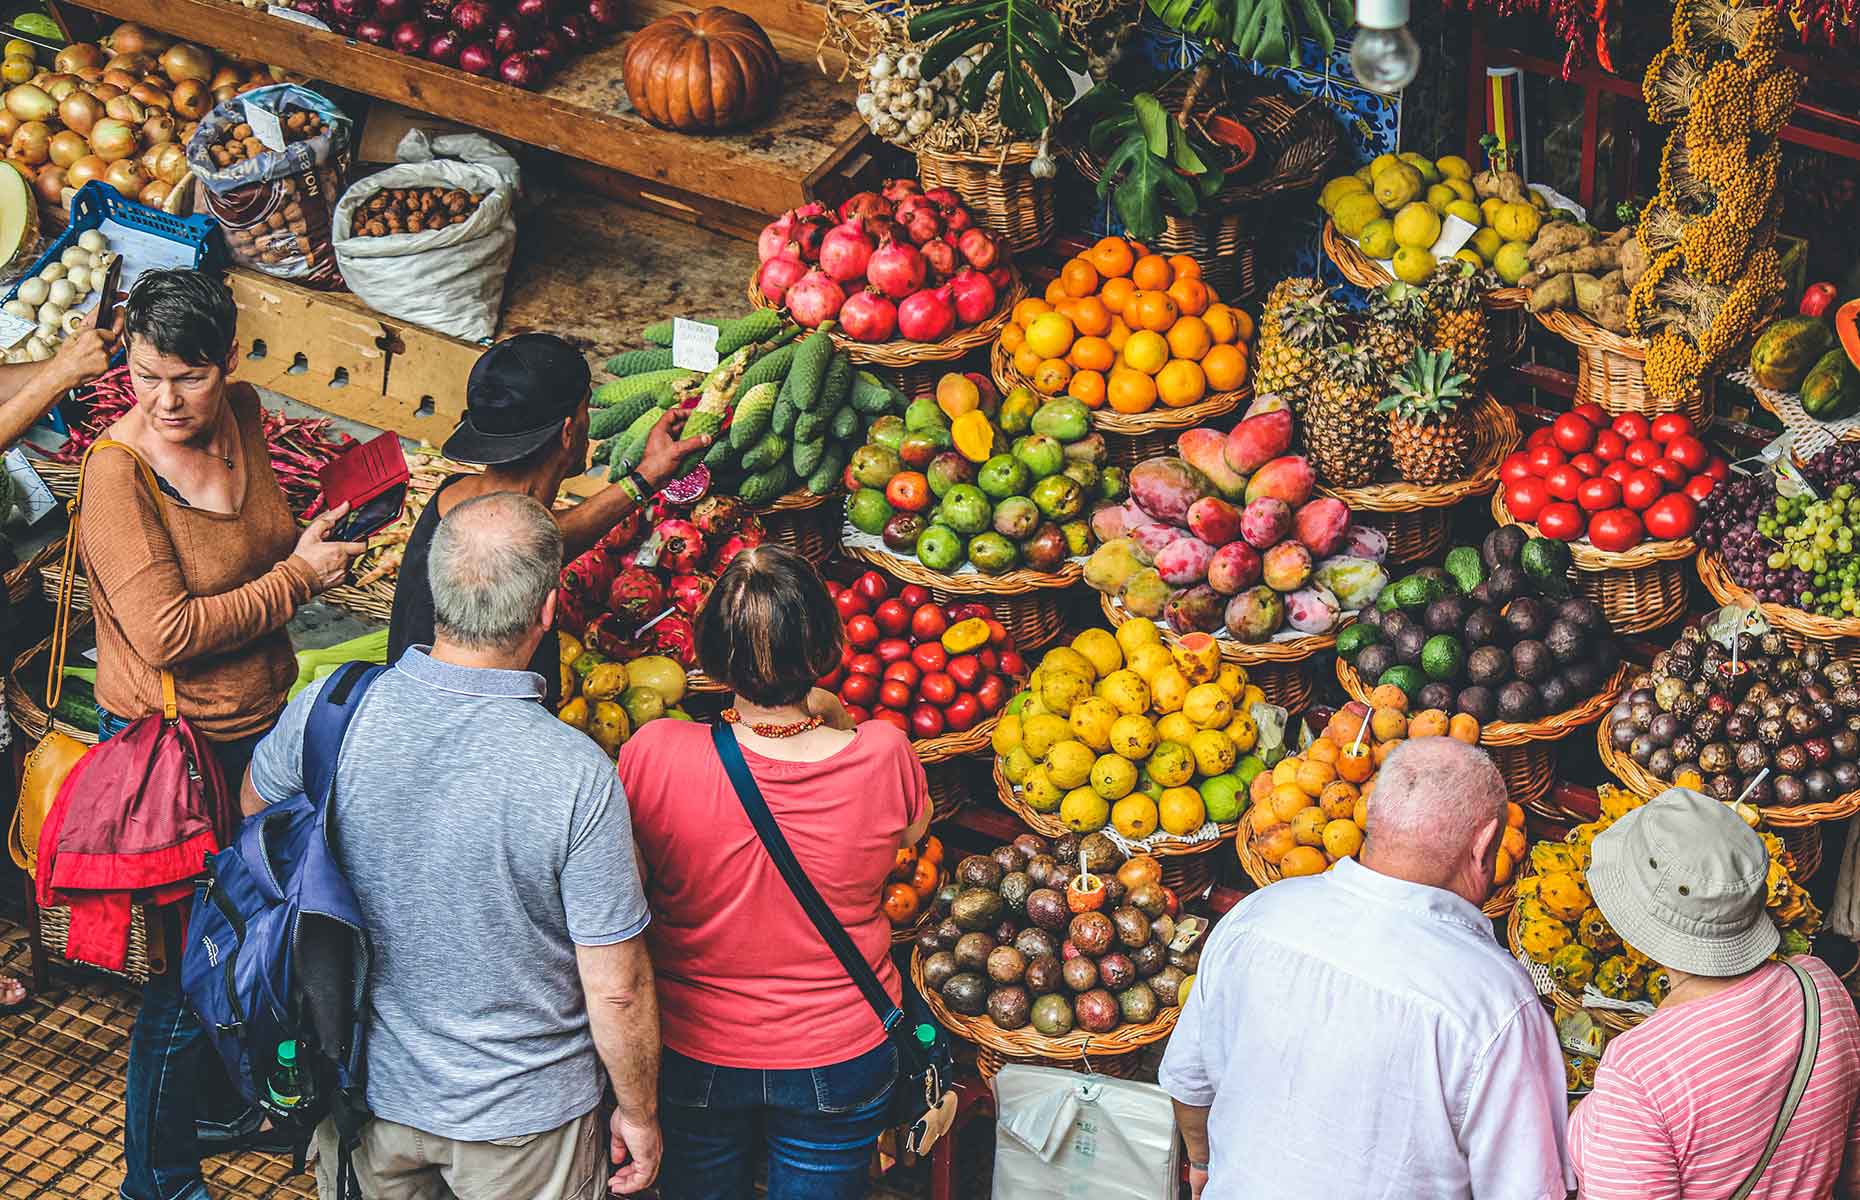 Funchal market (Images: Petr Pohudka/Shutterstock)